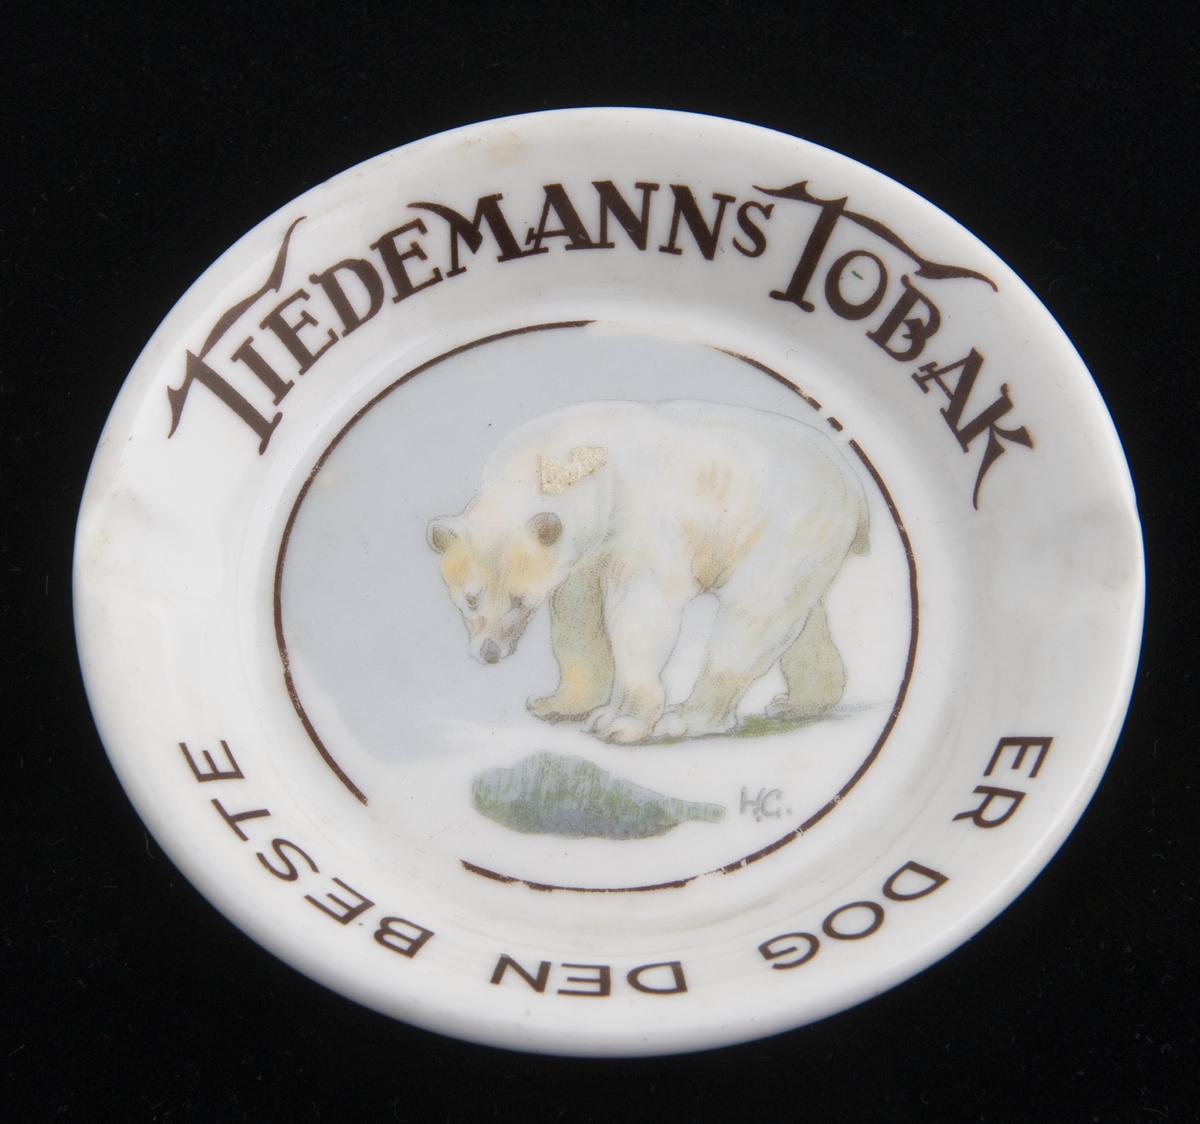 Lite, rundt askebeger i porselen med to fordypninger i randen. Påtrykket motiv av en isbjørn etter original av Halfdan Gran.